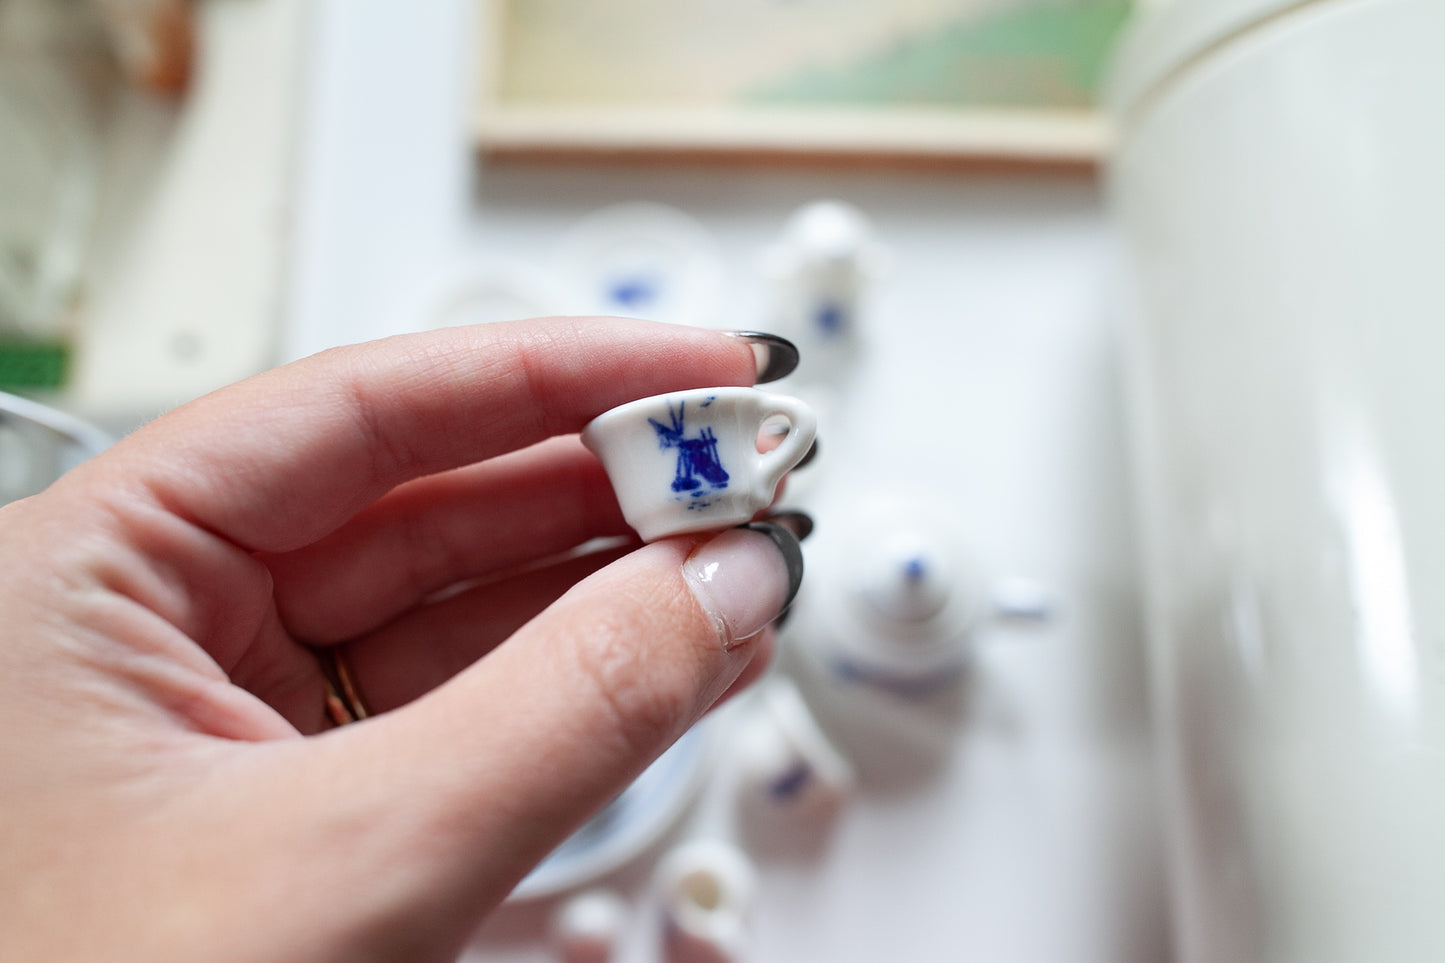 Vintage Miniature Tea Set - Blue and White Porcelain Tea Set